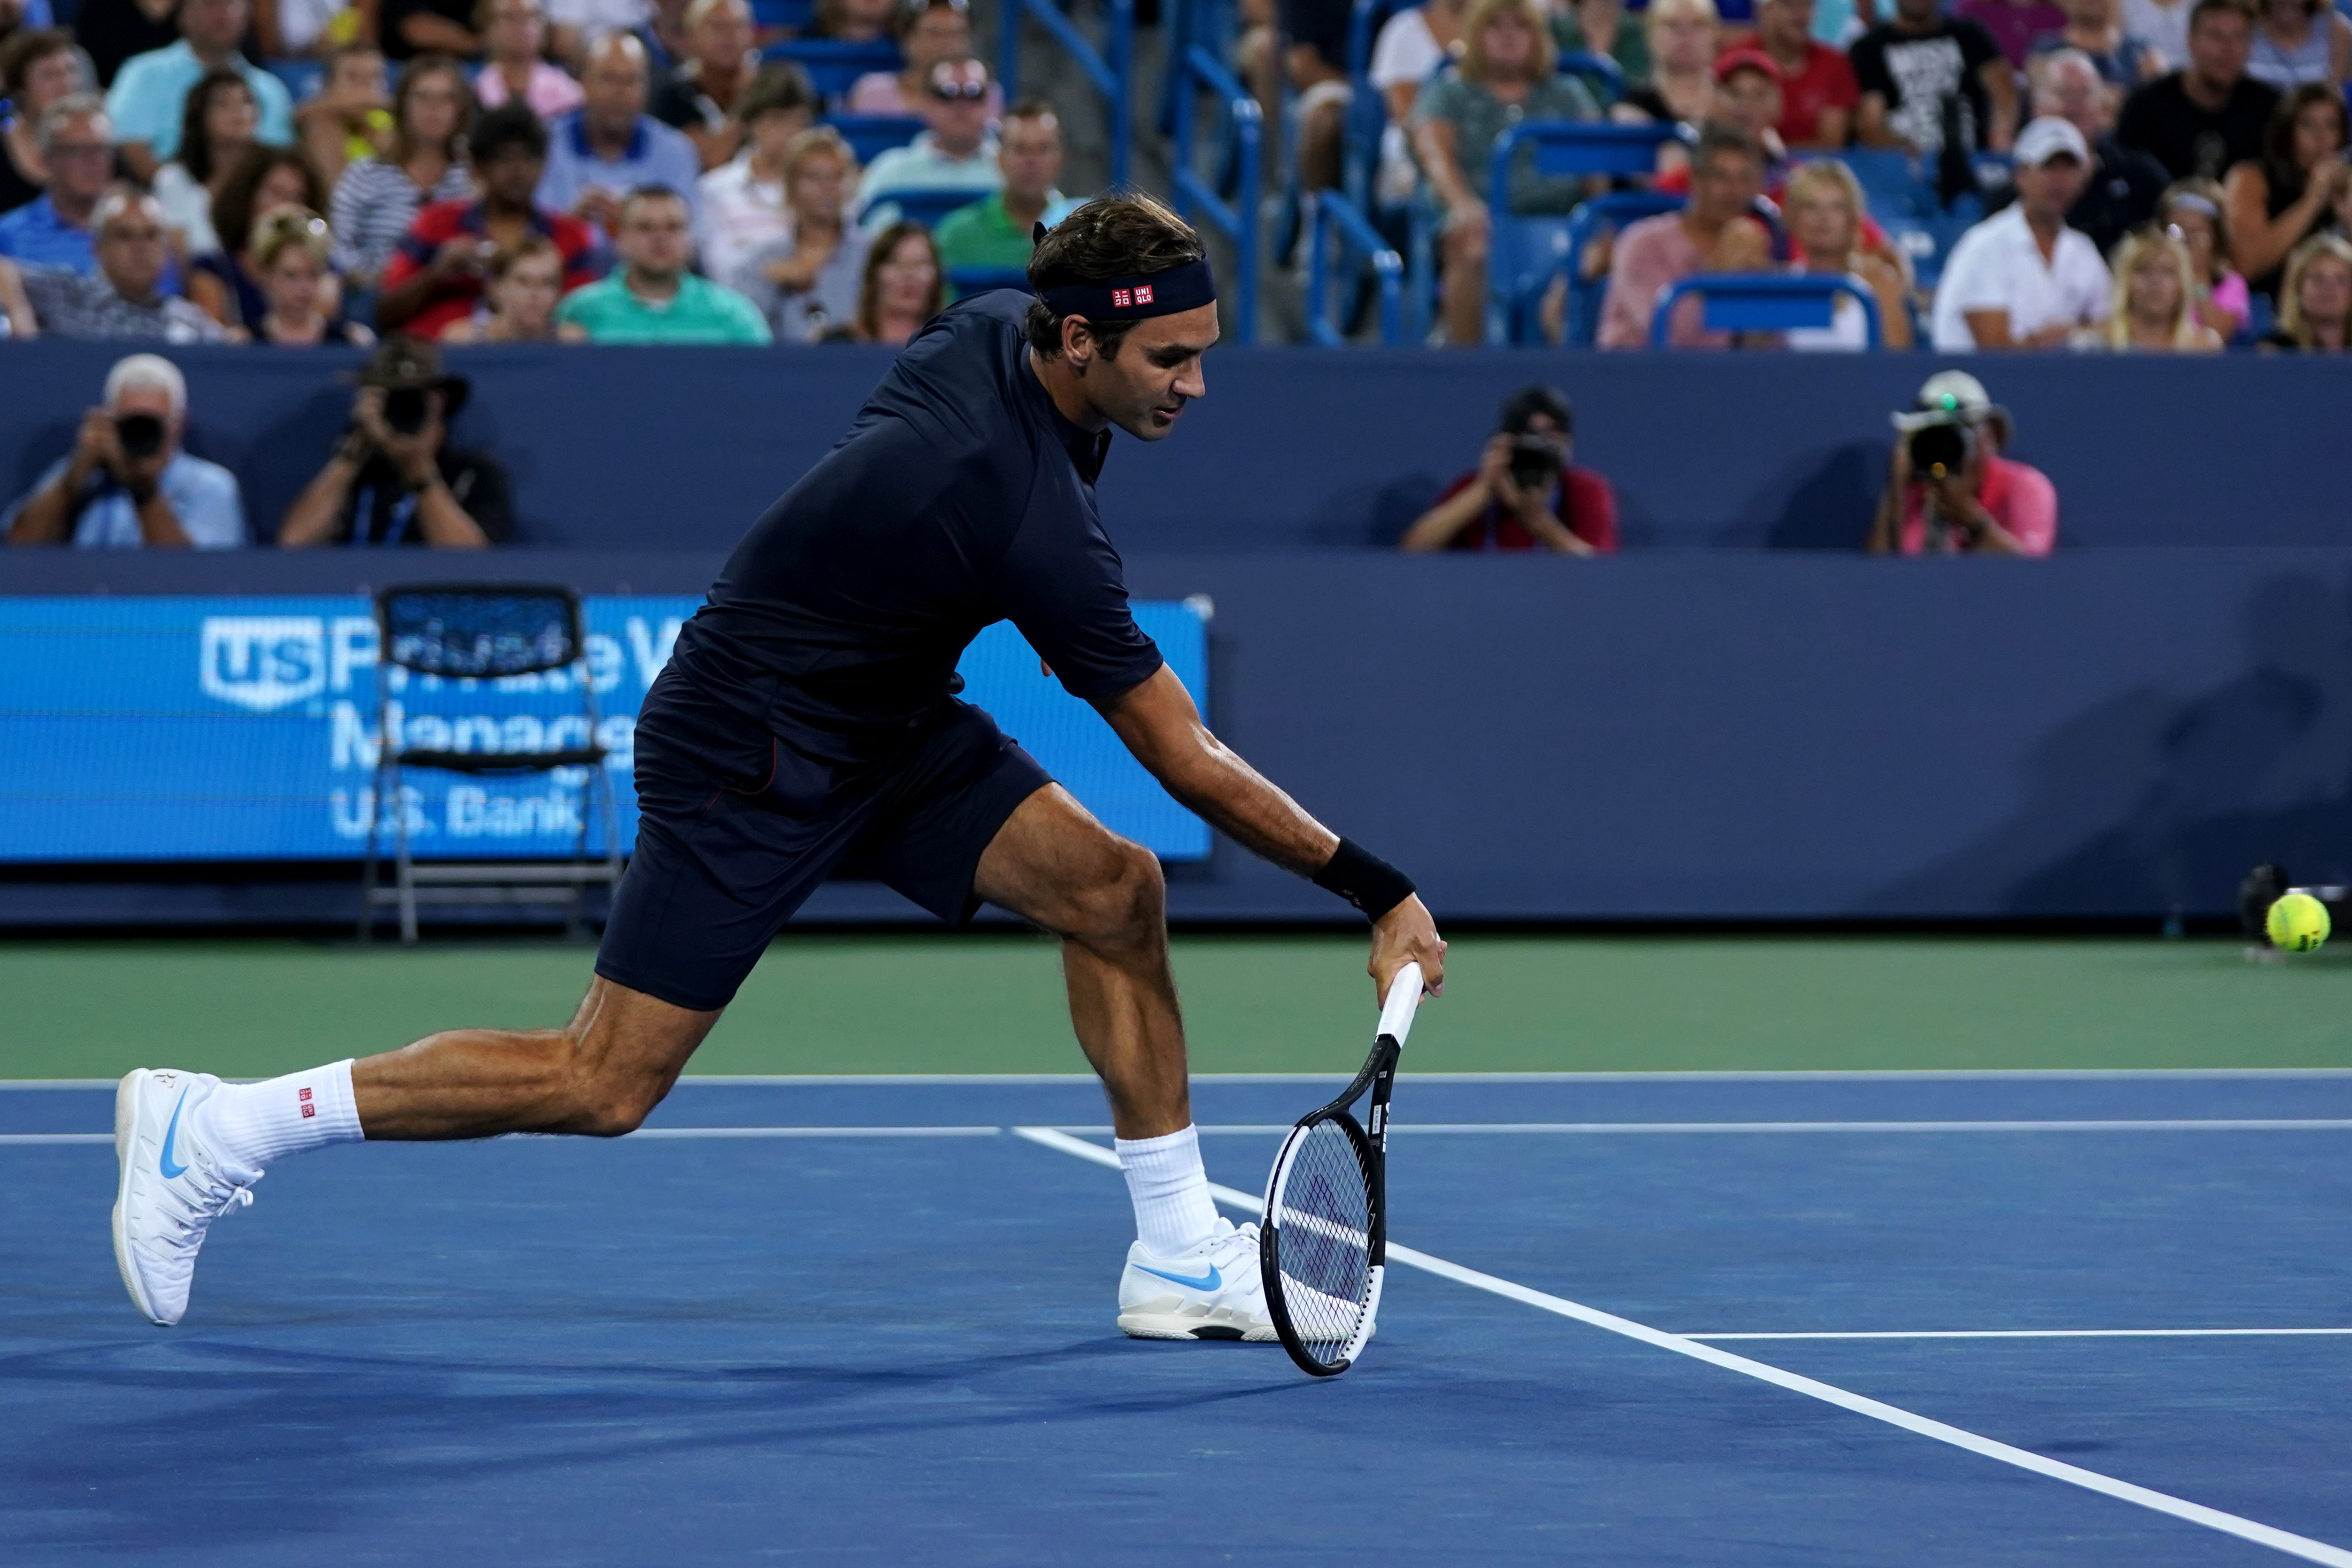 Tennis: Federer wears down Wawrinka to enter quarters